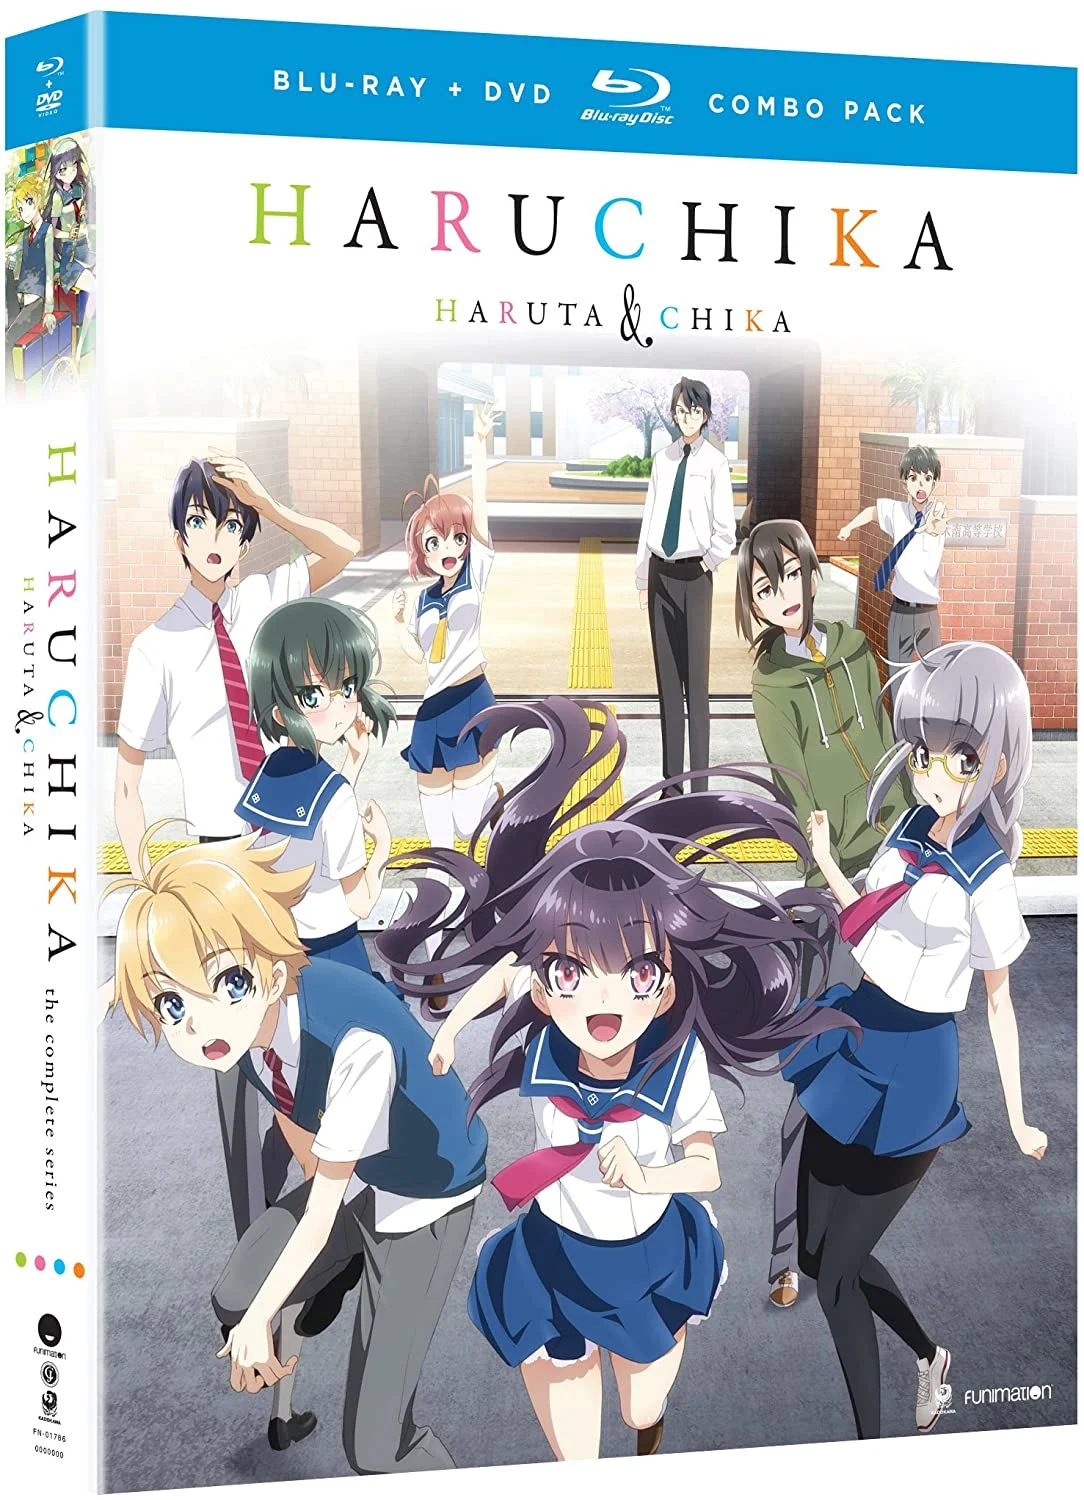 Haruchika: The Complete Series (Blu-ray/DVD Combo)